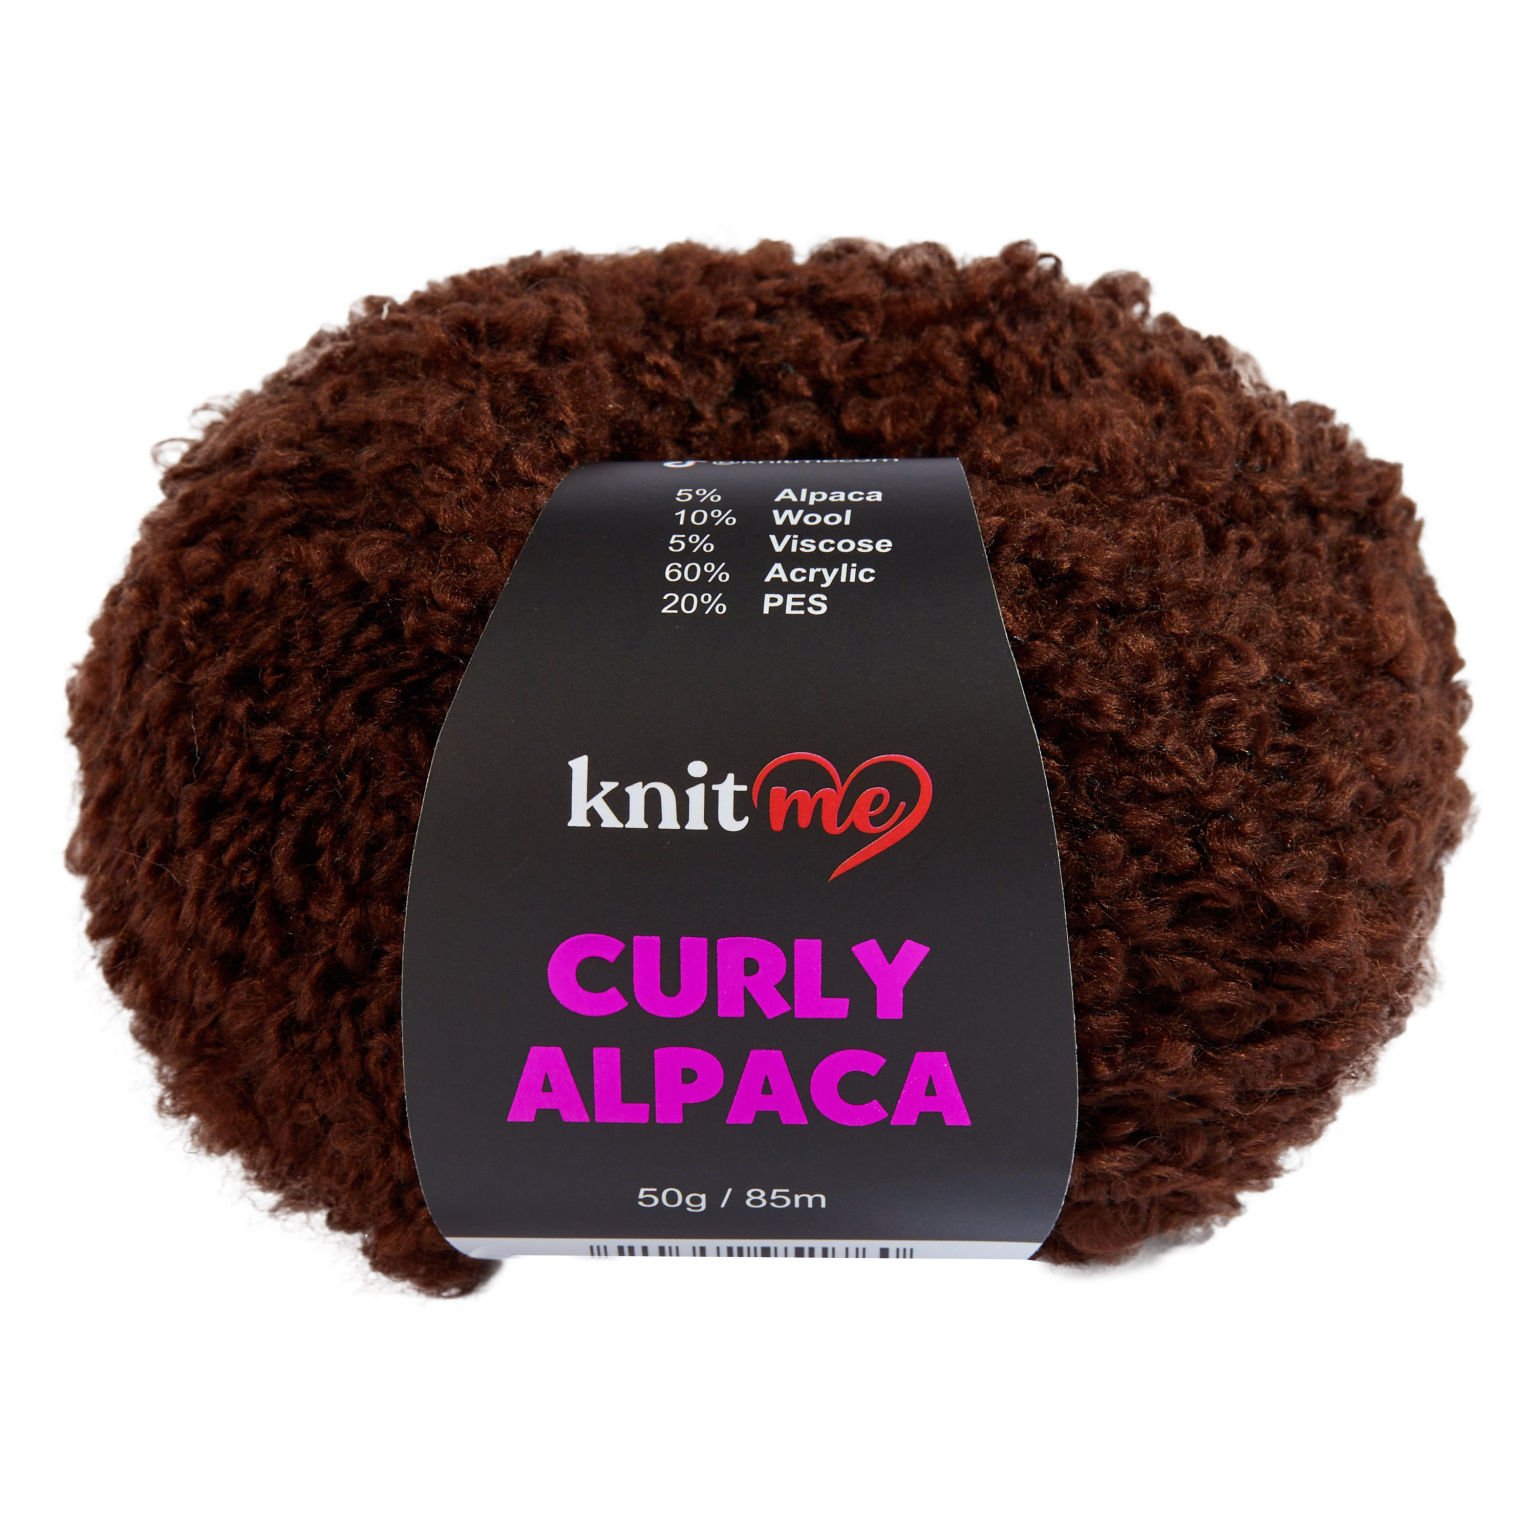 Knit Me Curly Alpaca KC17